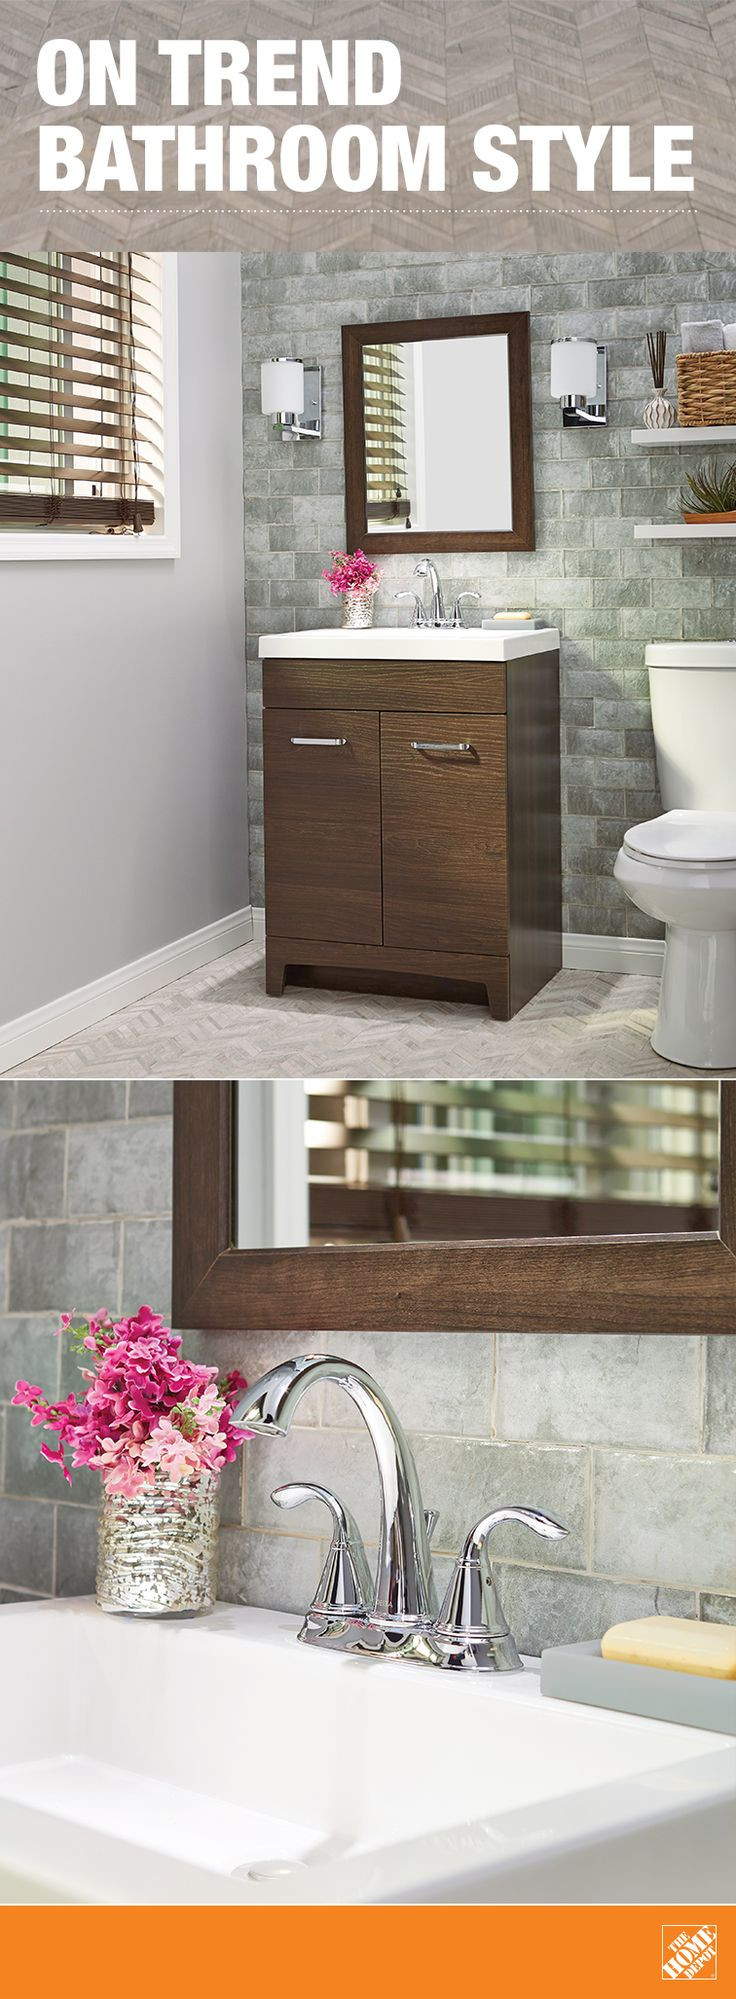 Home Depot Bathrooms Remodeling
 376 best images about Bathroom Design Ideas on Pinterest